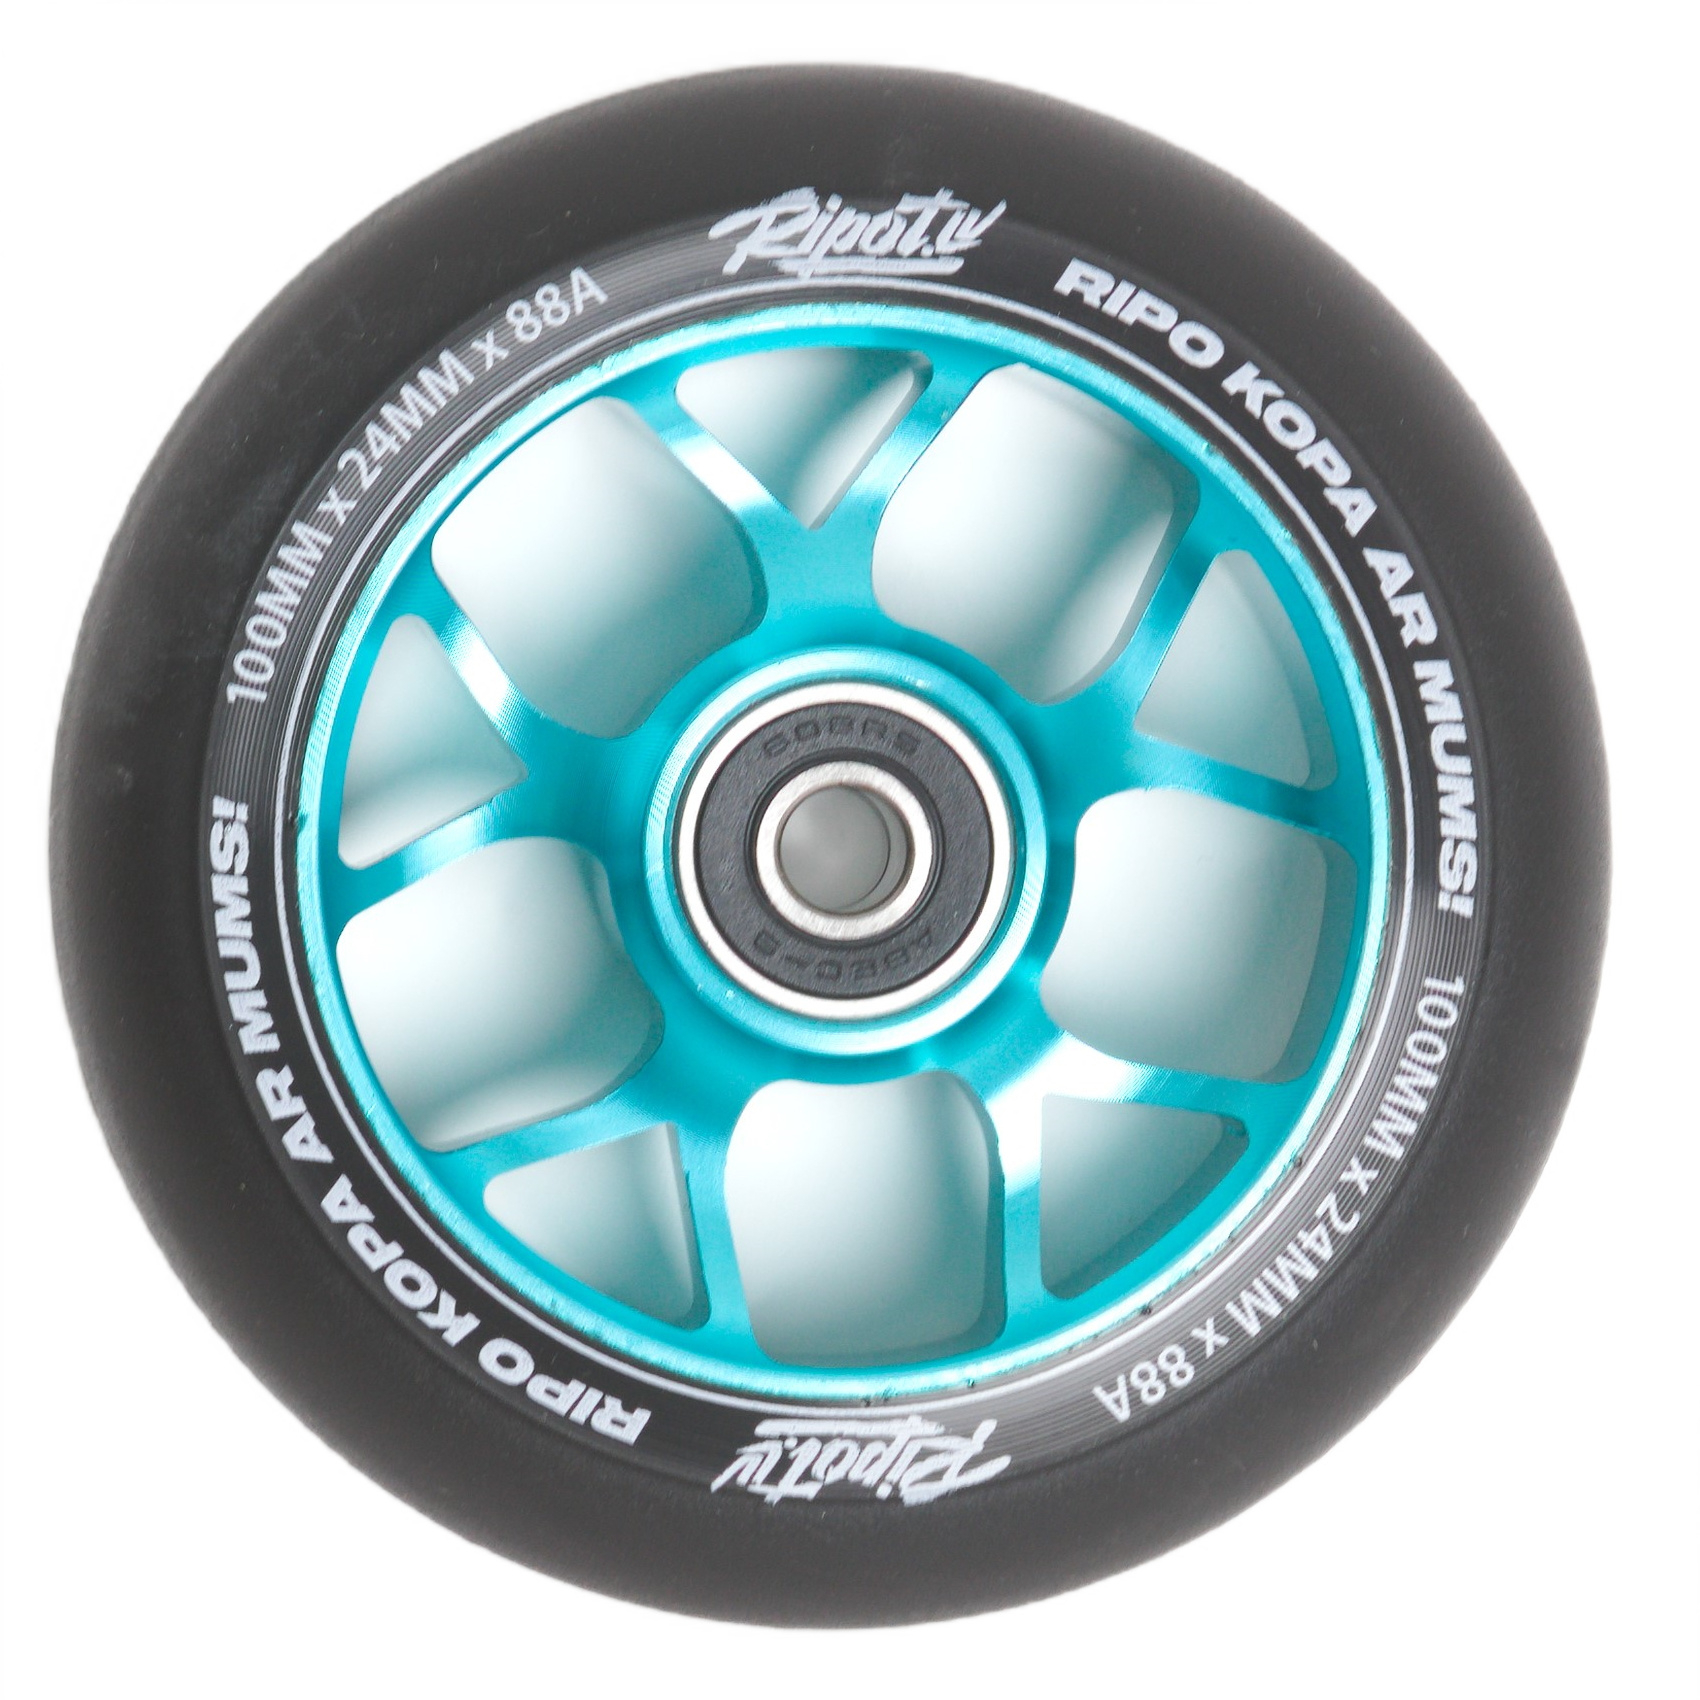 Ripot.lv Signature Pro Scooter wheel 100mm